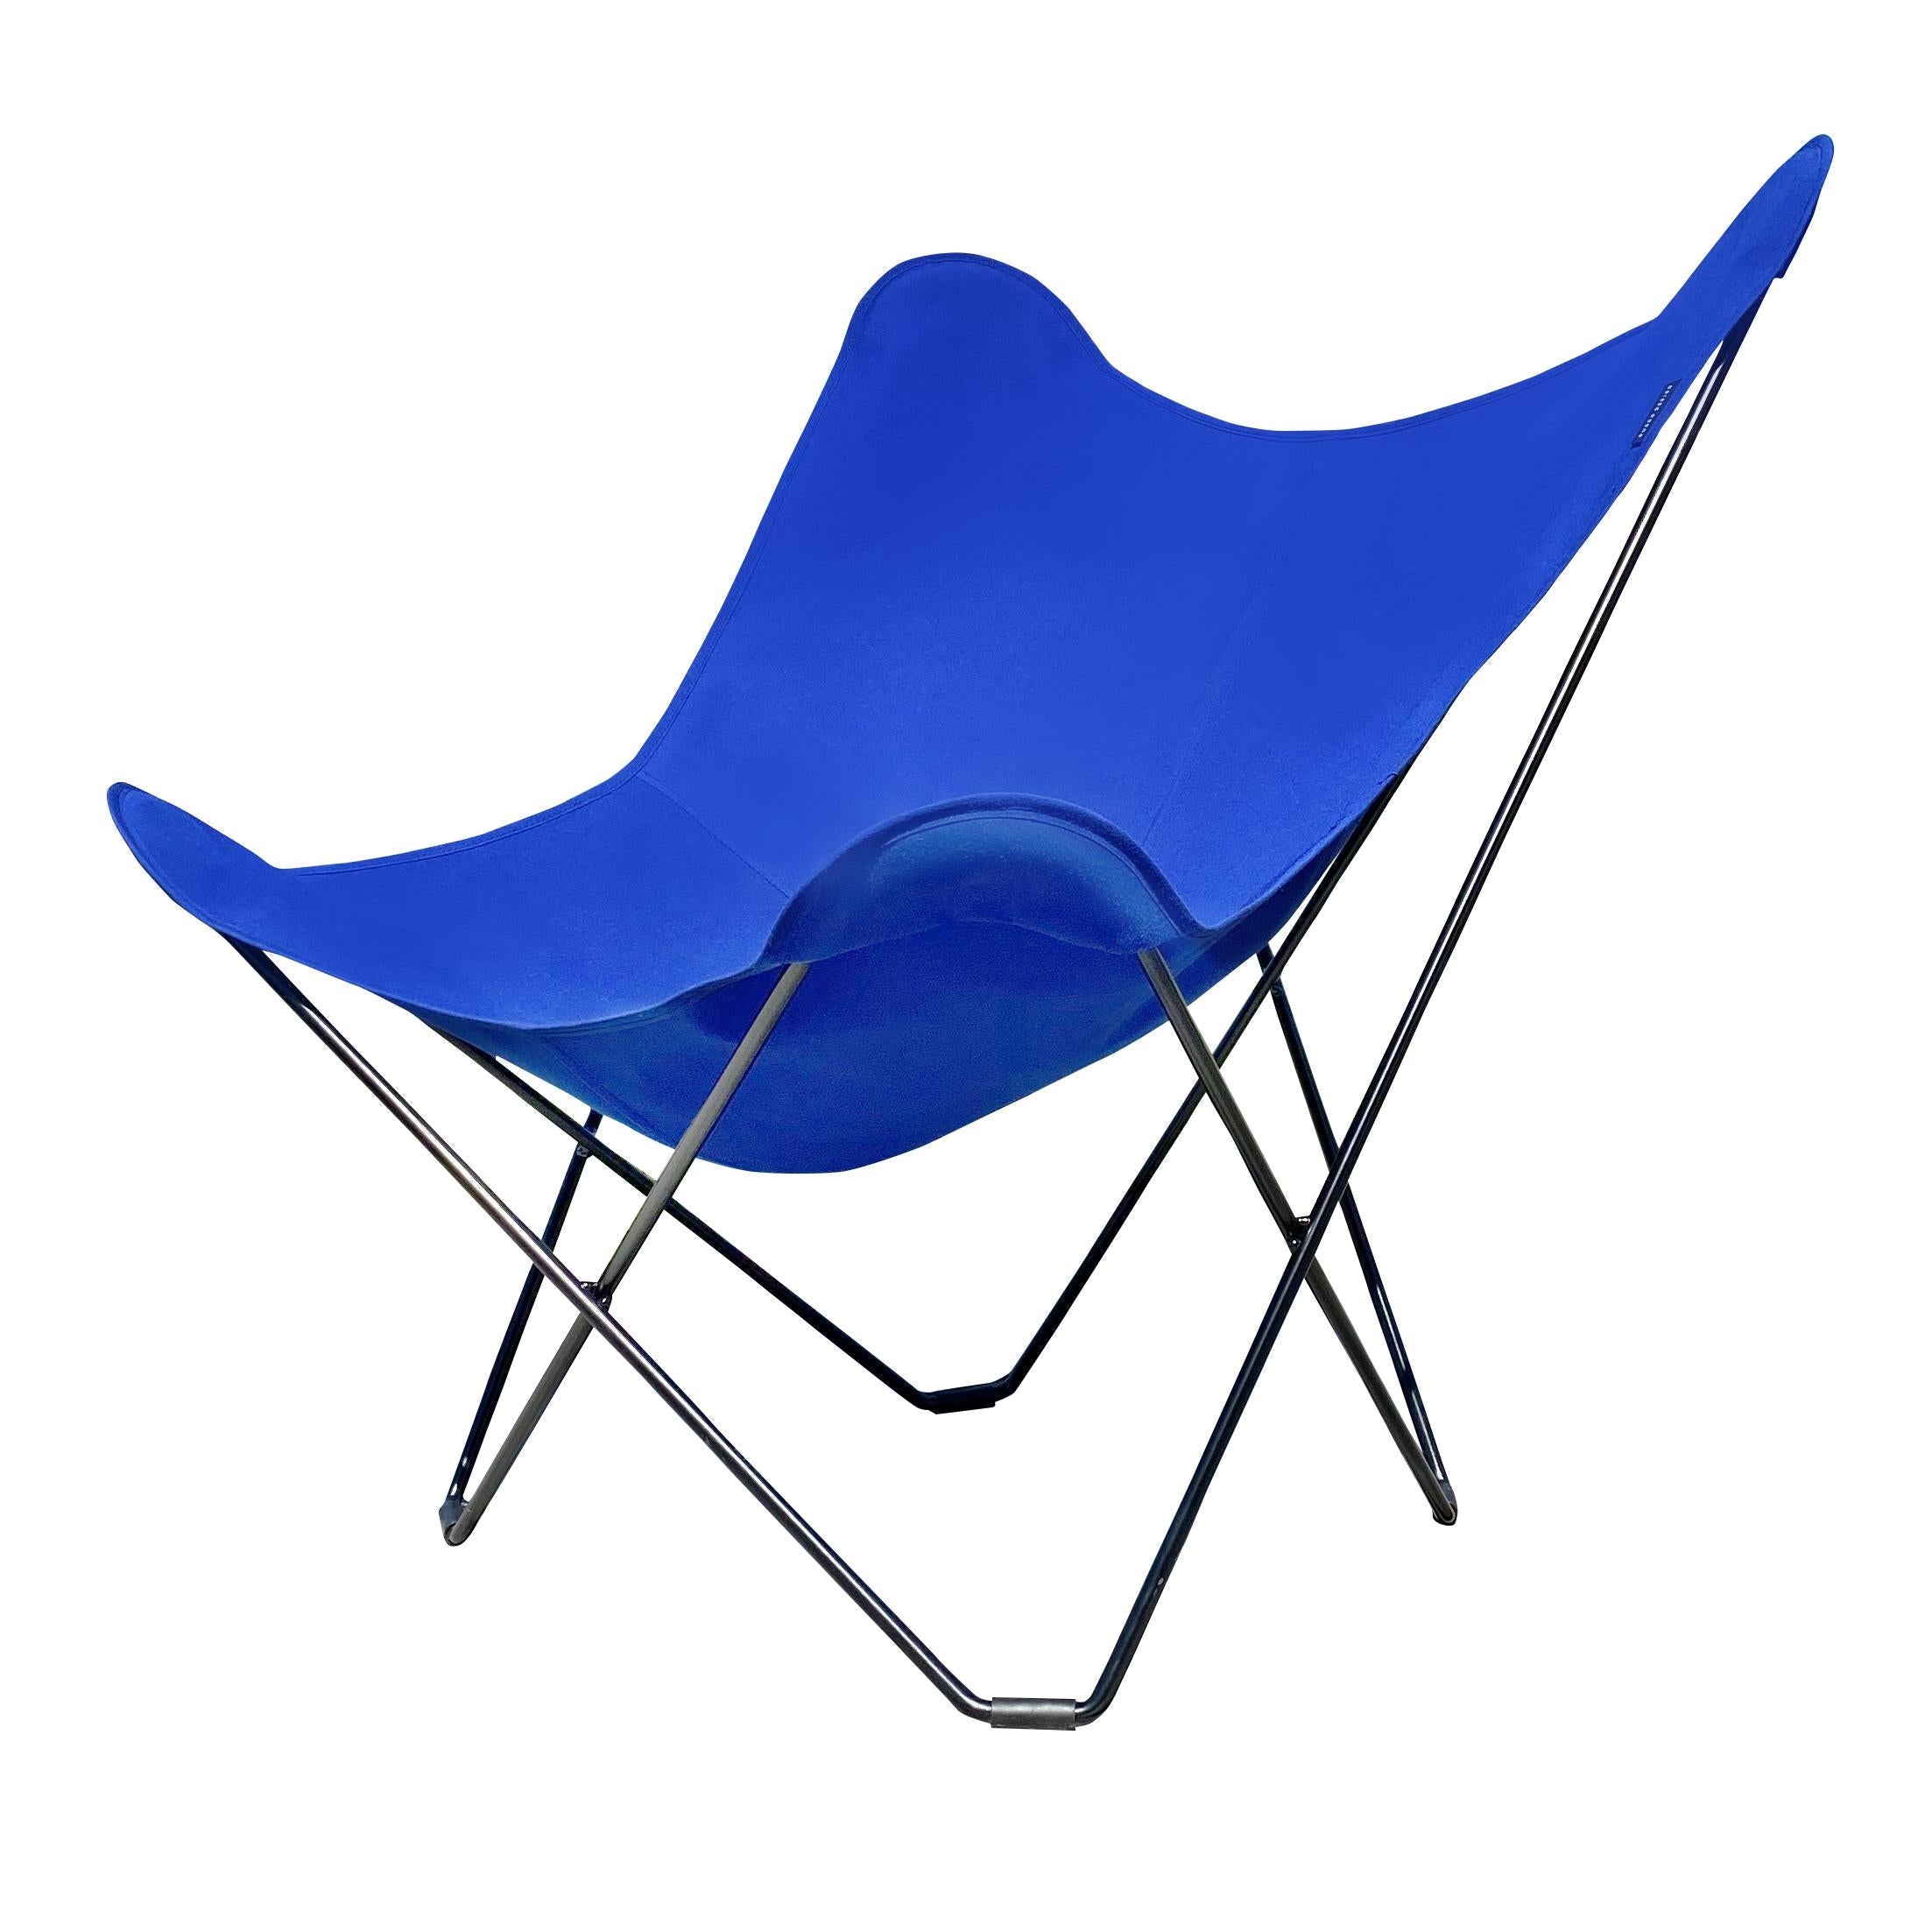 Cuero Sunshine Mariposa Butterfly Chair, Gestell Atlantic Blue/Black Outdoor